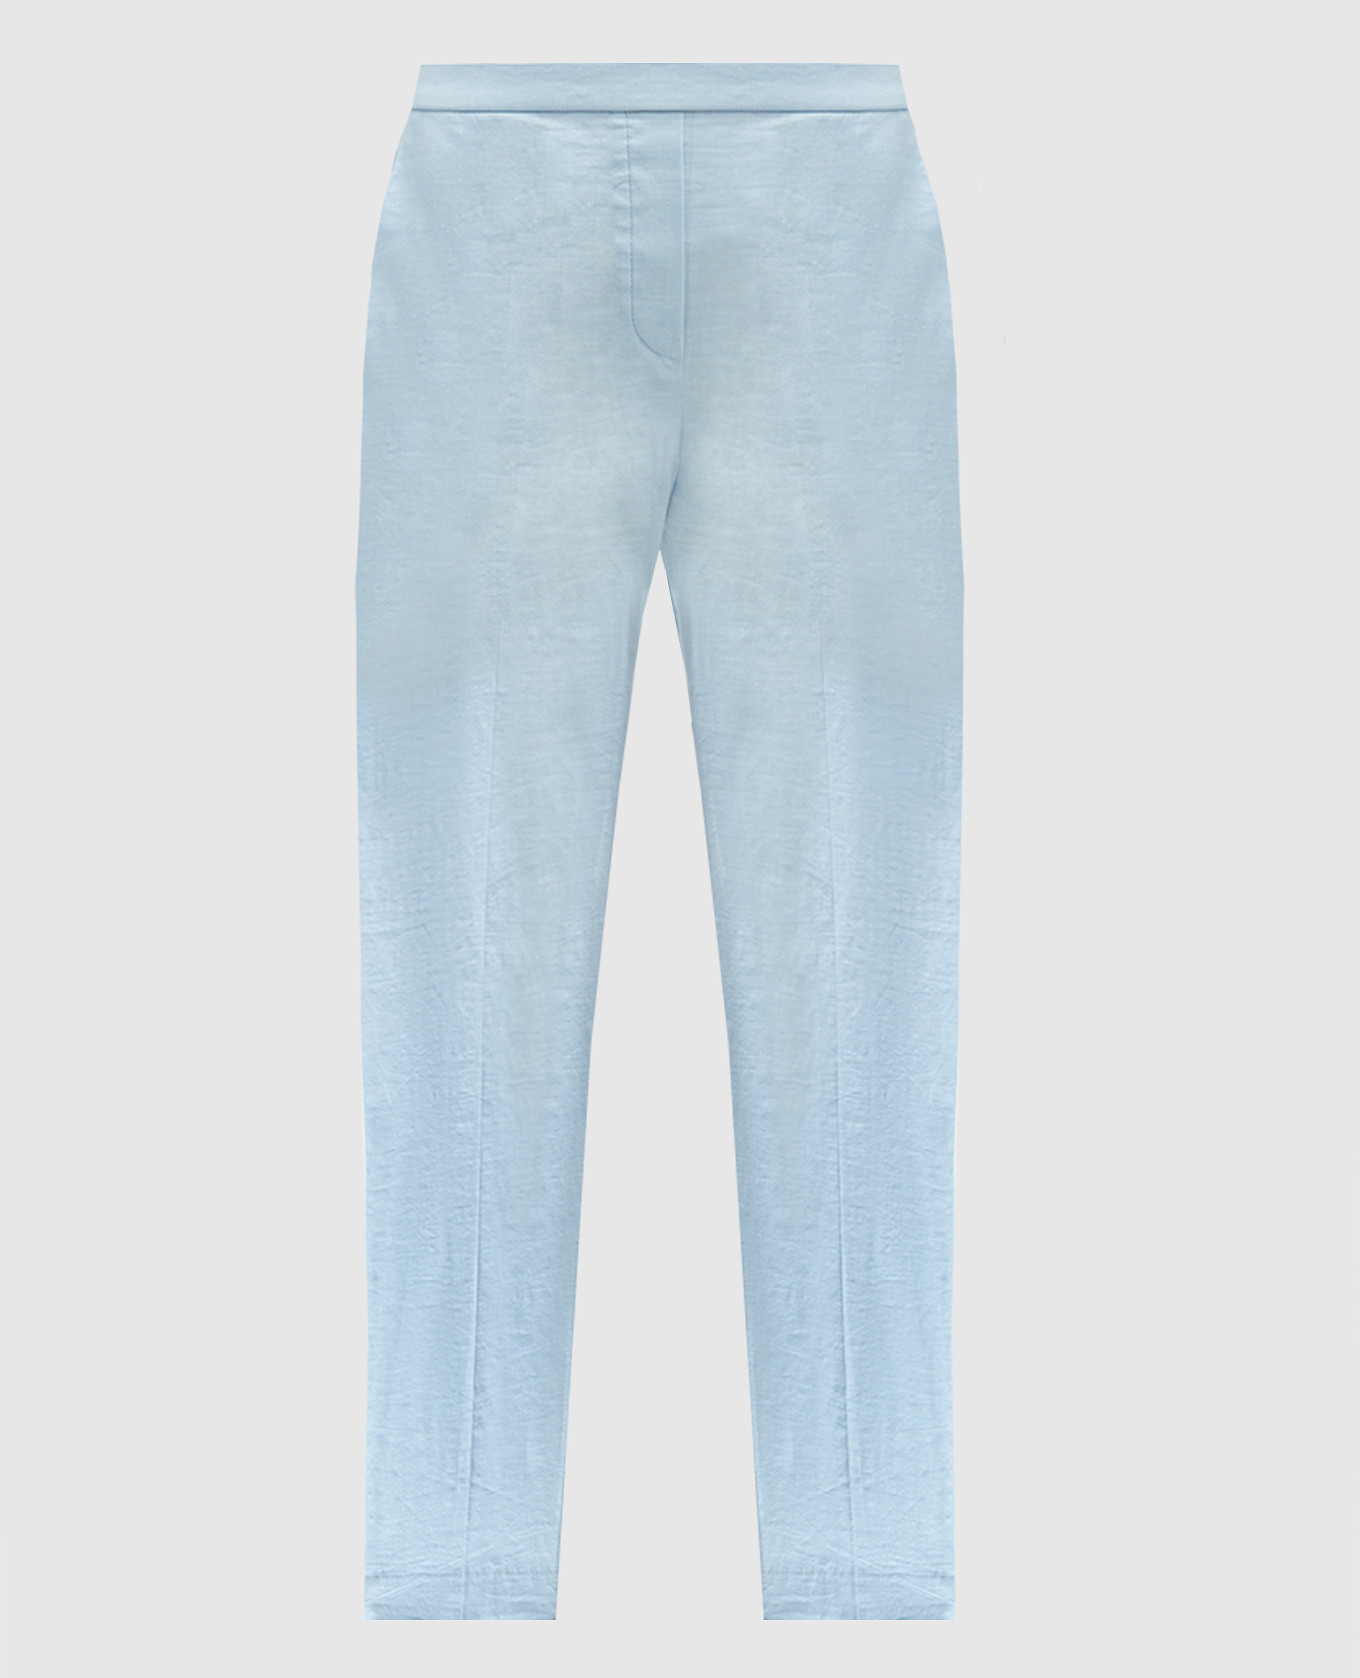 Treeca blue linen pants